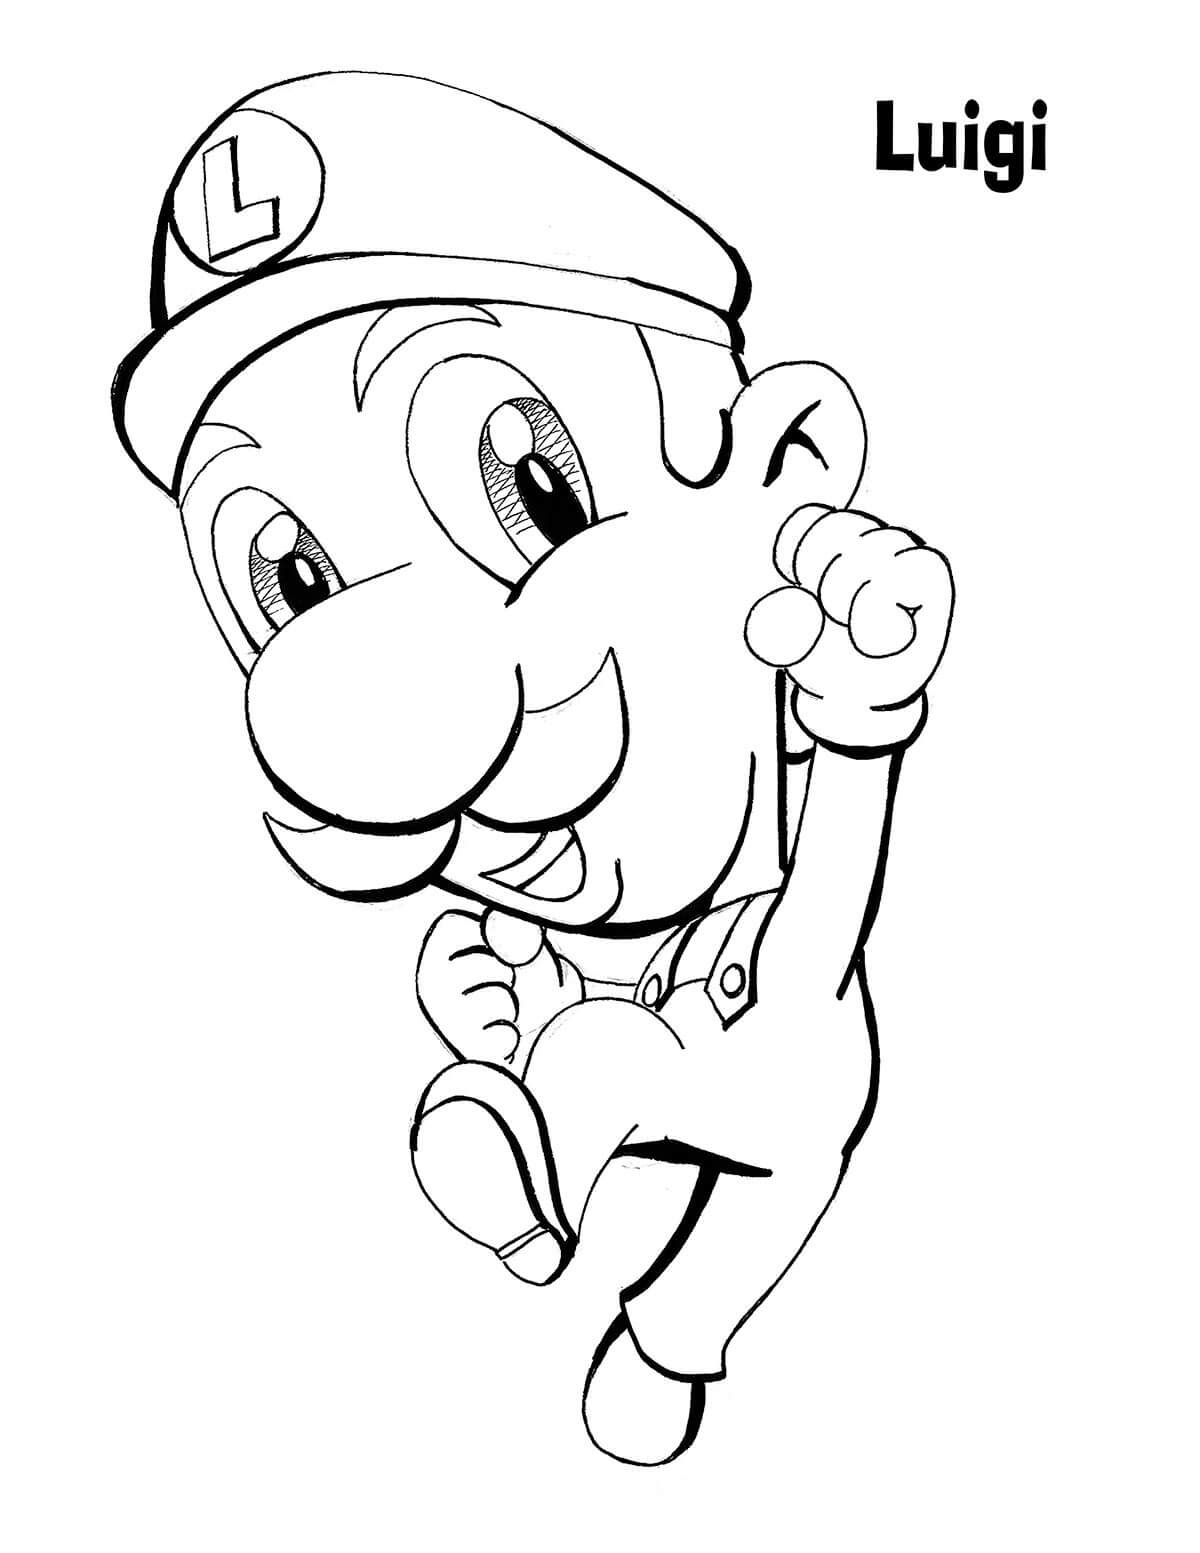 Desenhos de Divertido Luigi Pulando para colorir